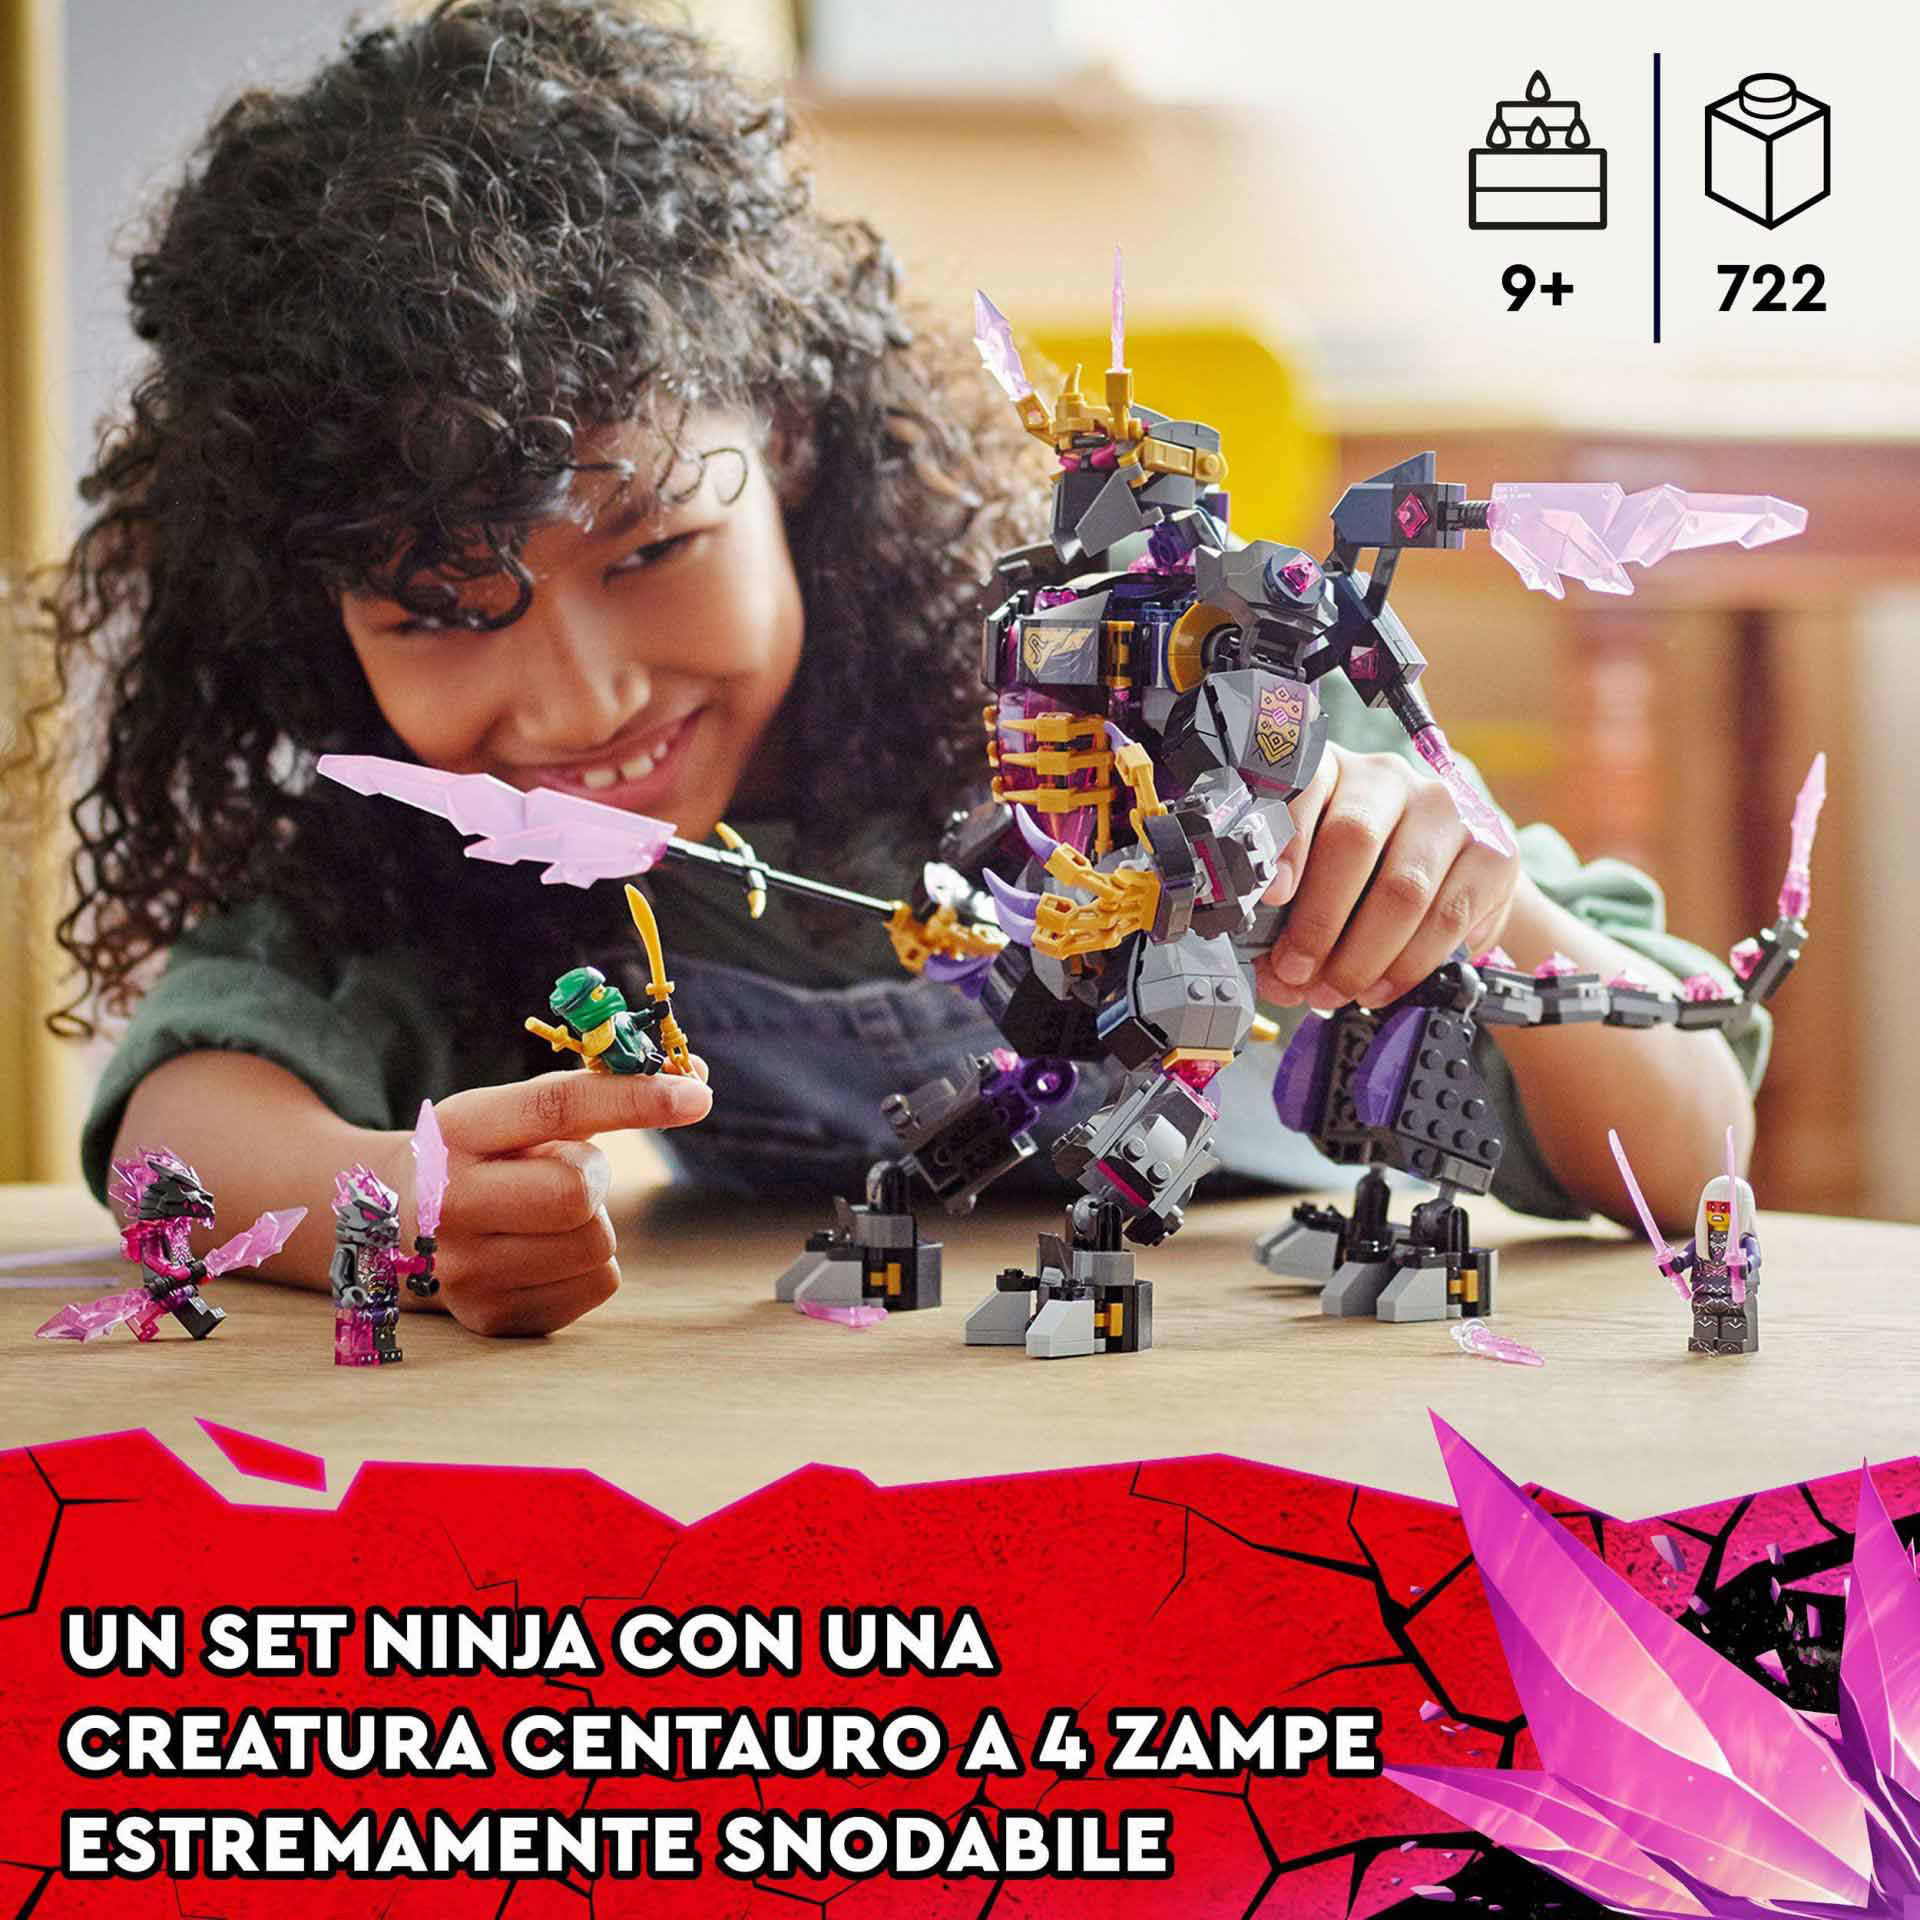 LEGO Ninjago Il Re dei Cristalli, Set Serie TV Crystallized con Action Figure e 71772, , large